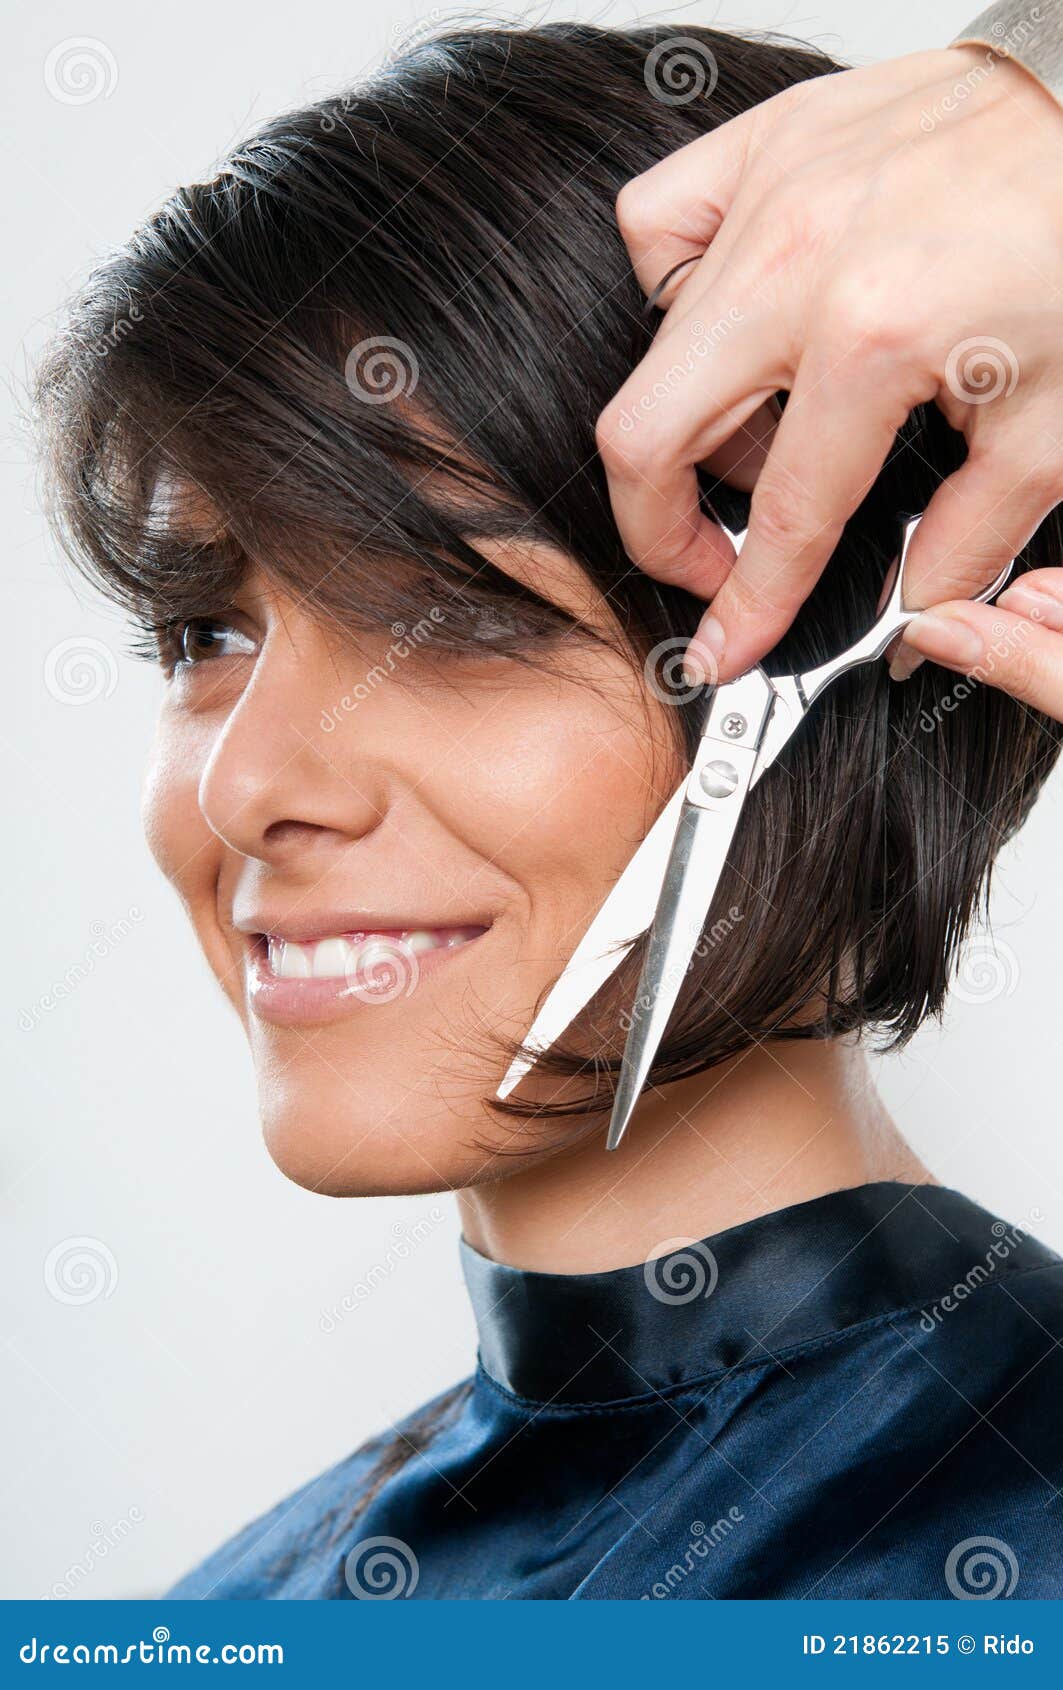 Cutting hair stock image. Image of model, comb, closeup - 21862215